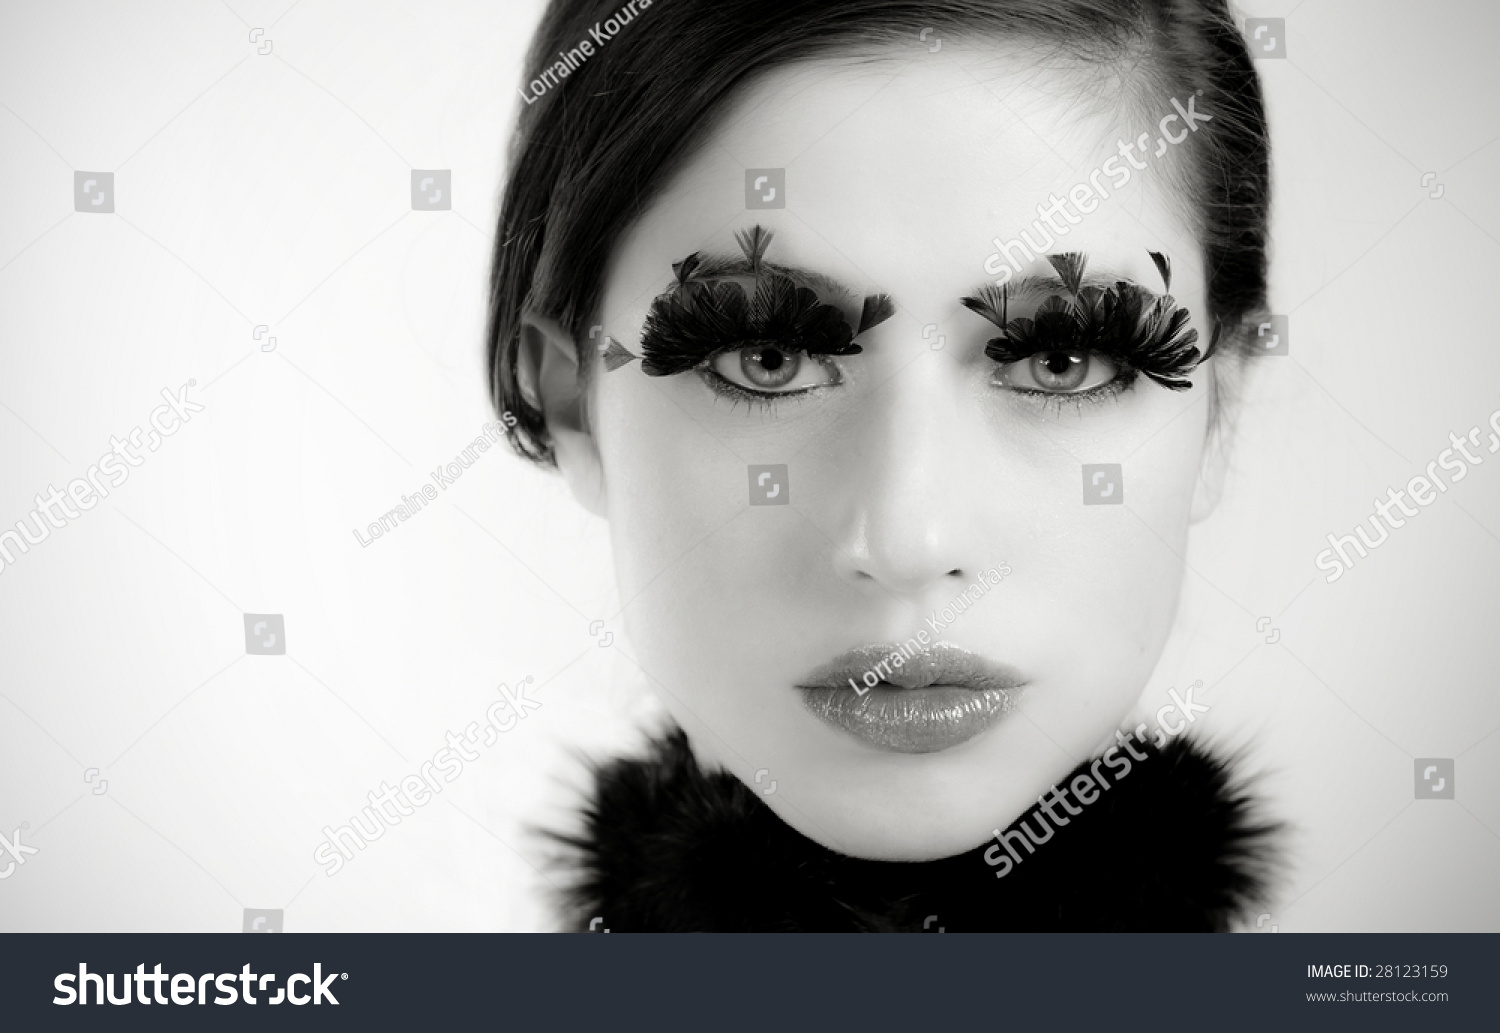 Dramatic Beauty Portrait Stock Photo 28123159 - Shutterstock